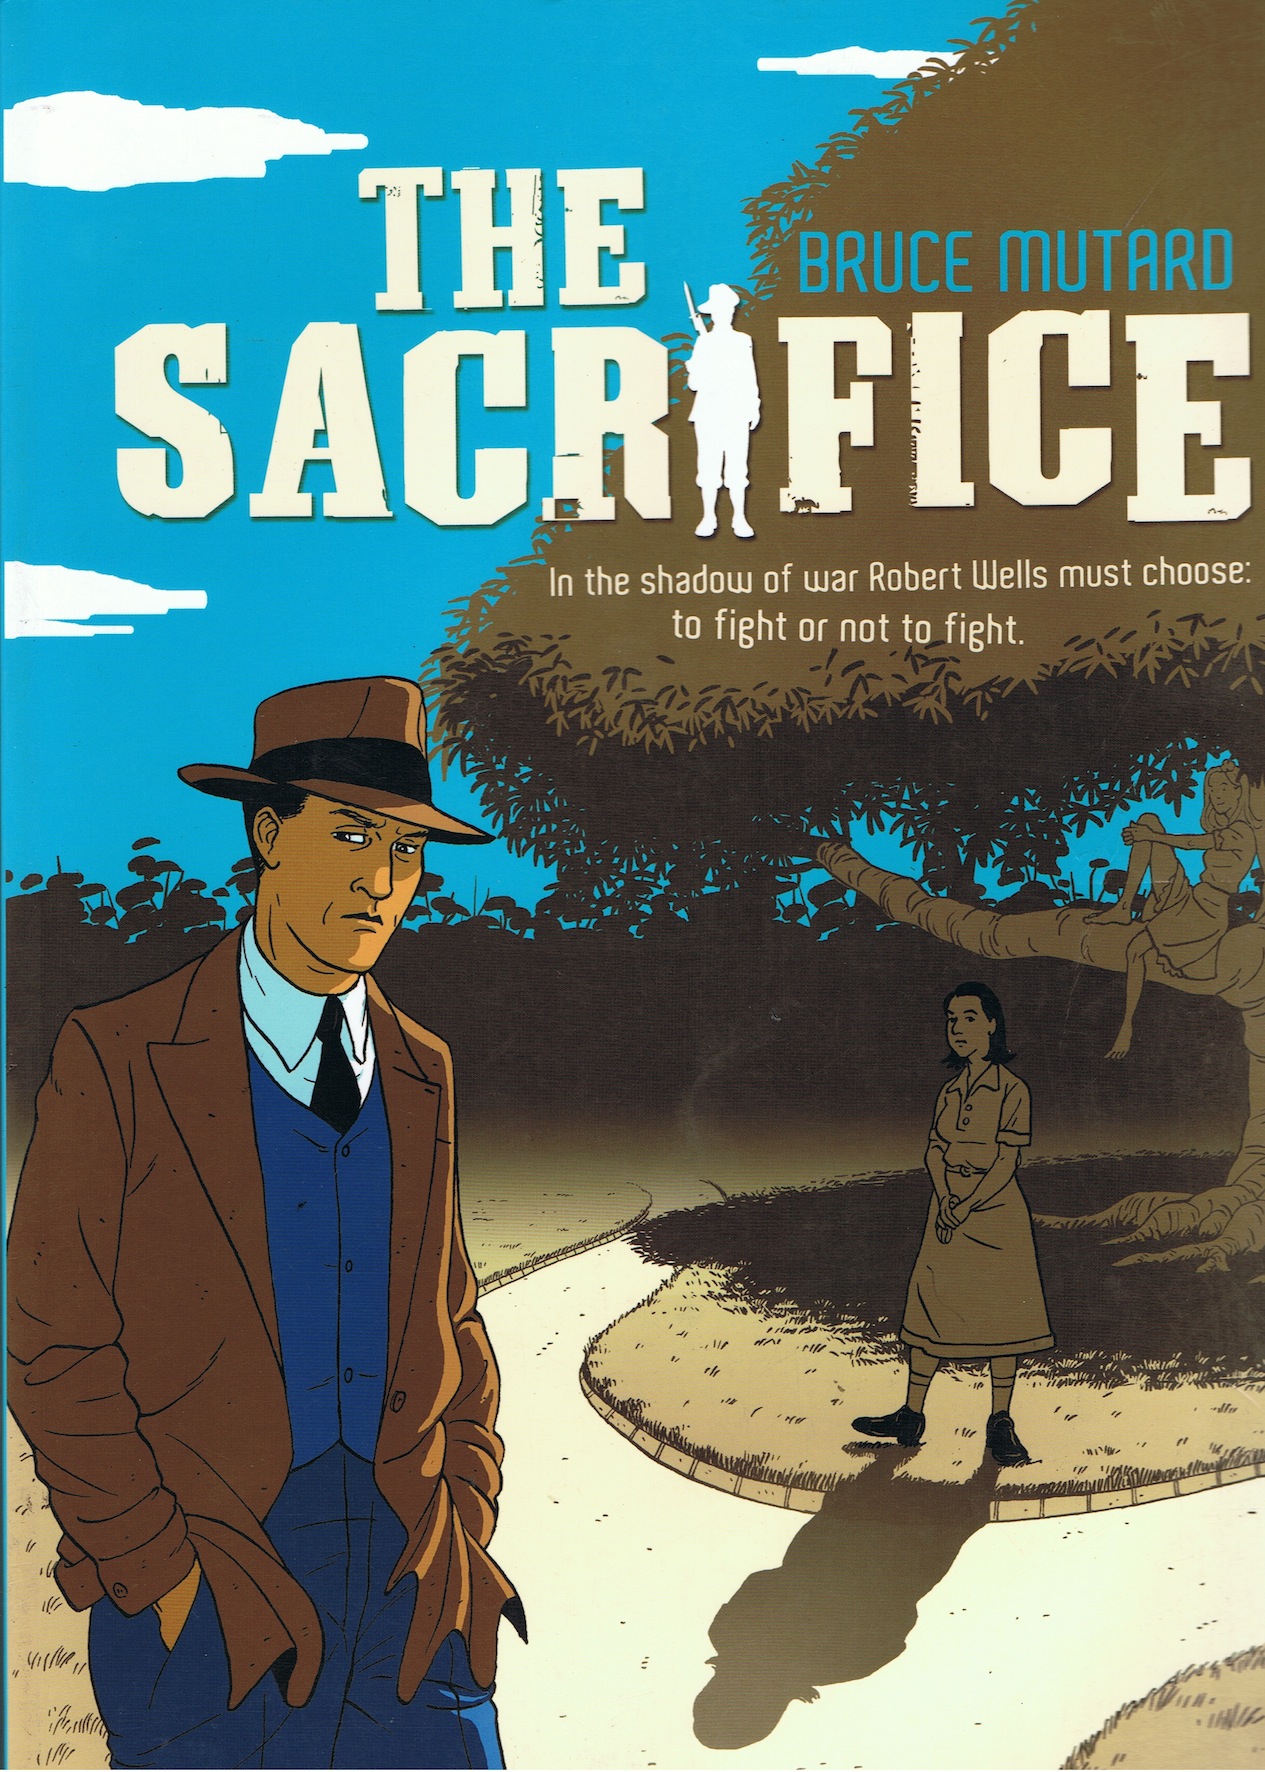 The Sacrifice by Bruce Mutard